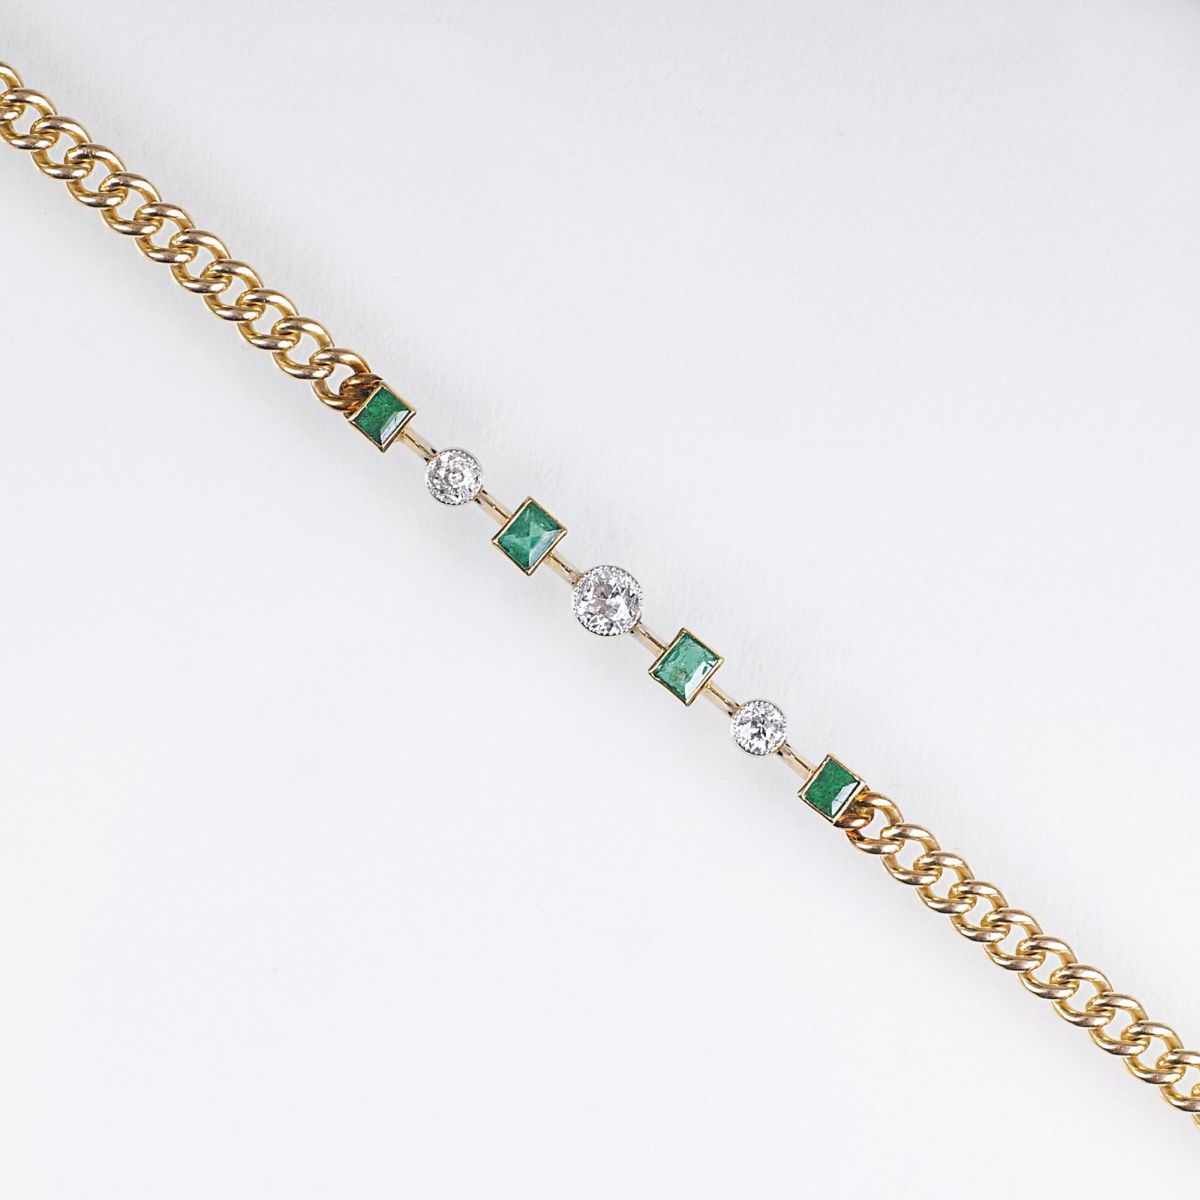 An Art Nouveau Bracelet with Emeralds and Old Cut Diamonds